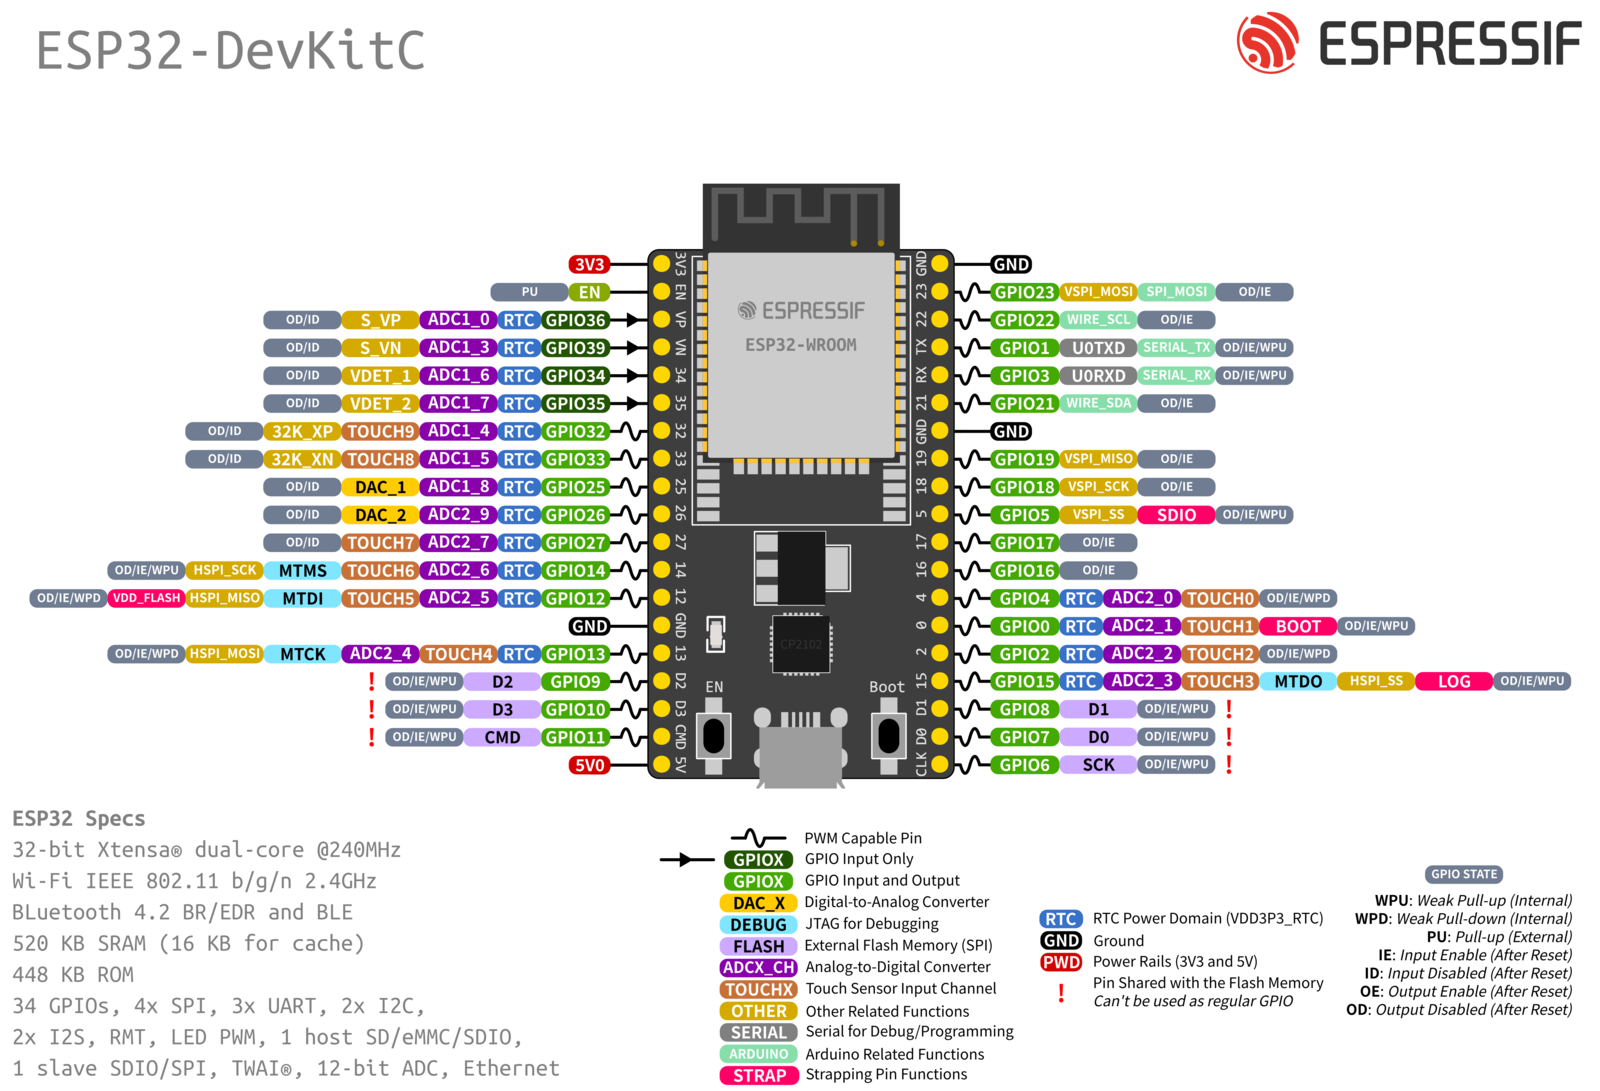 ESP32-DevKitC (click to enlarge)